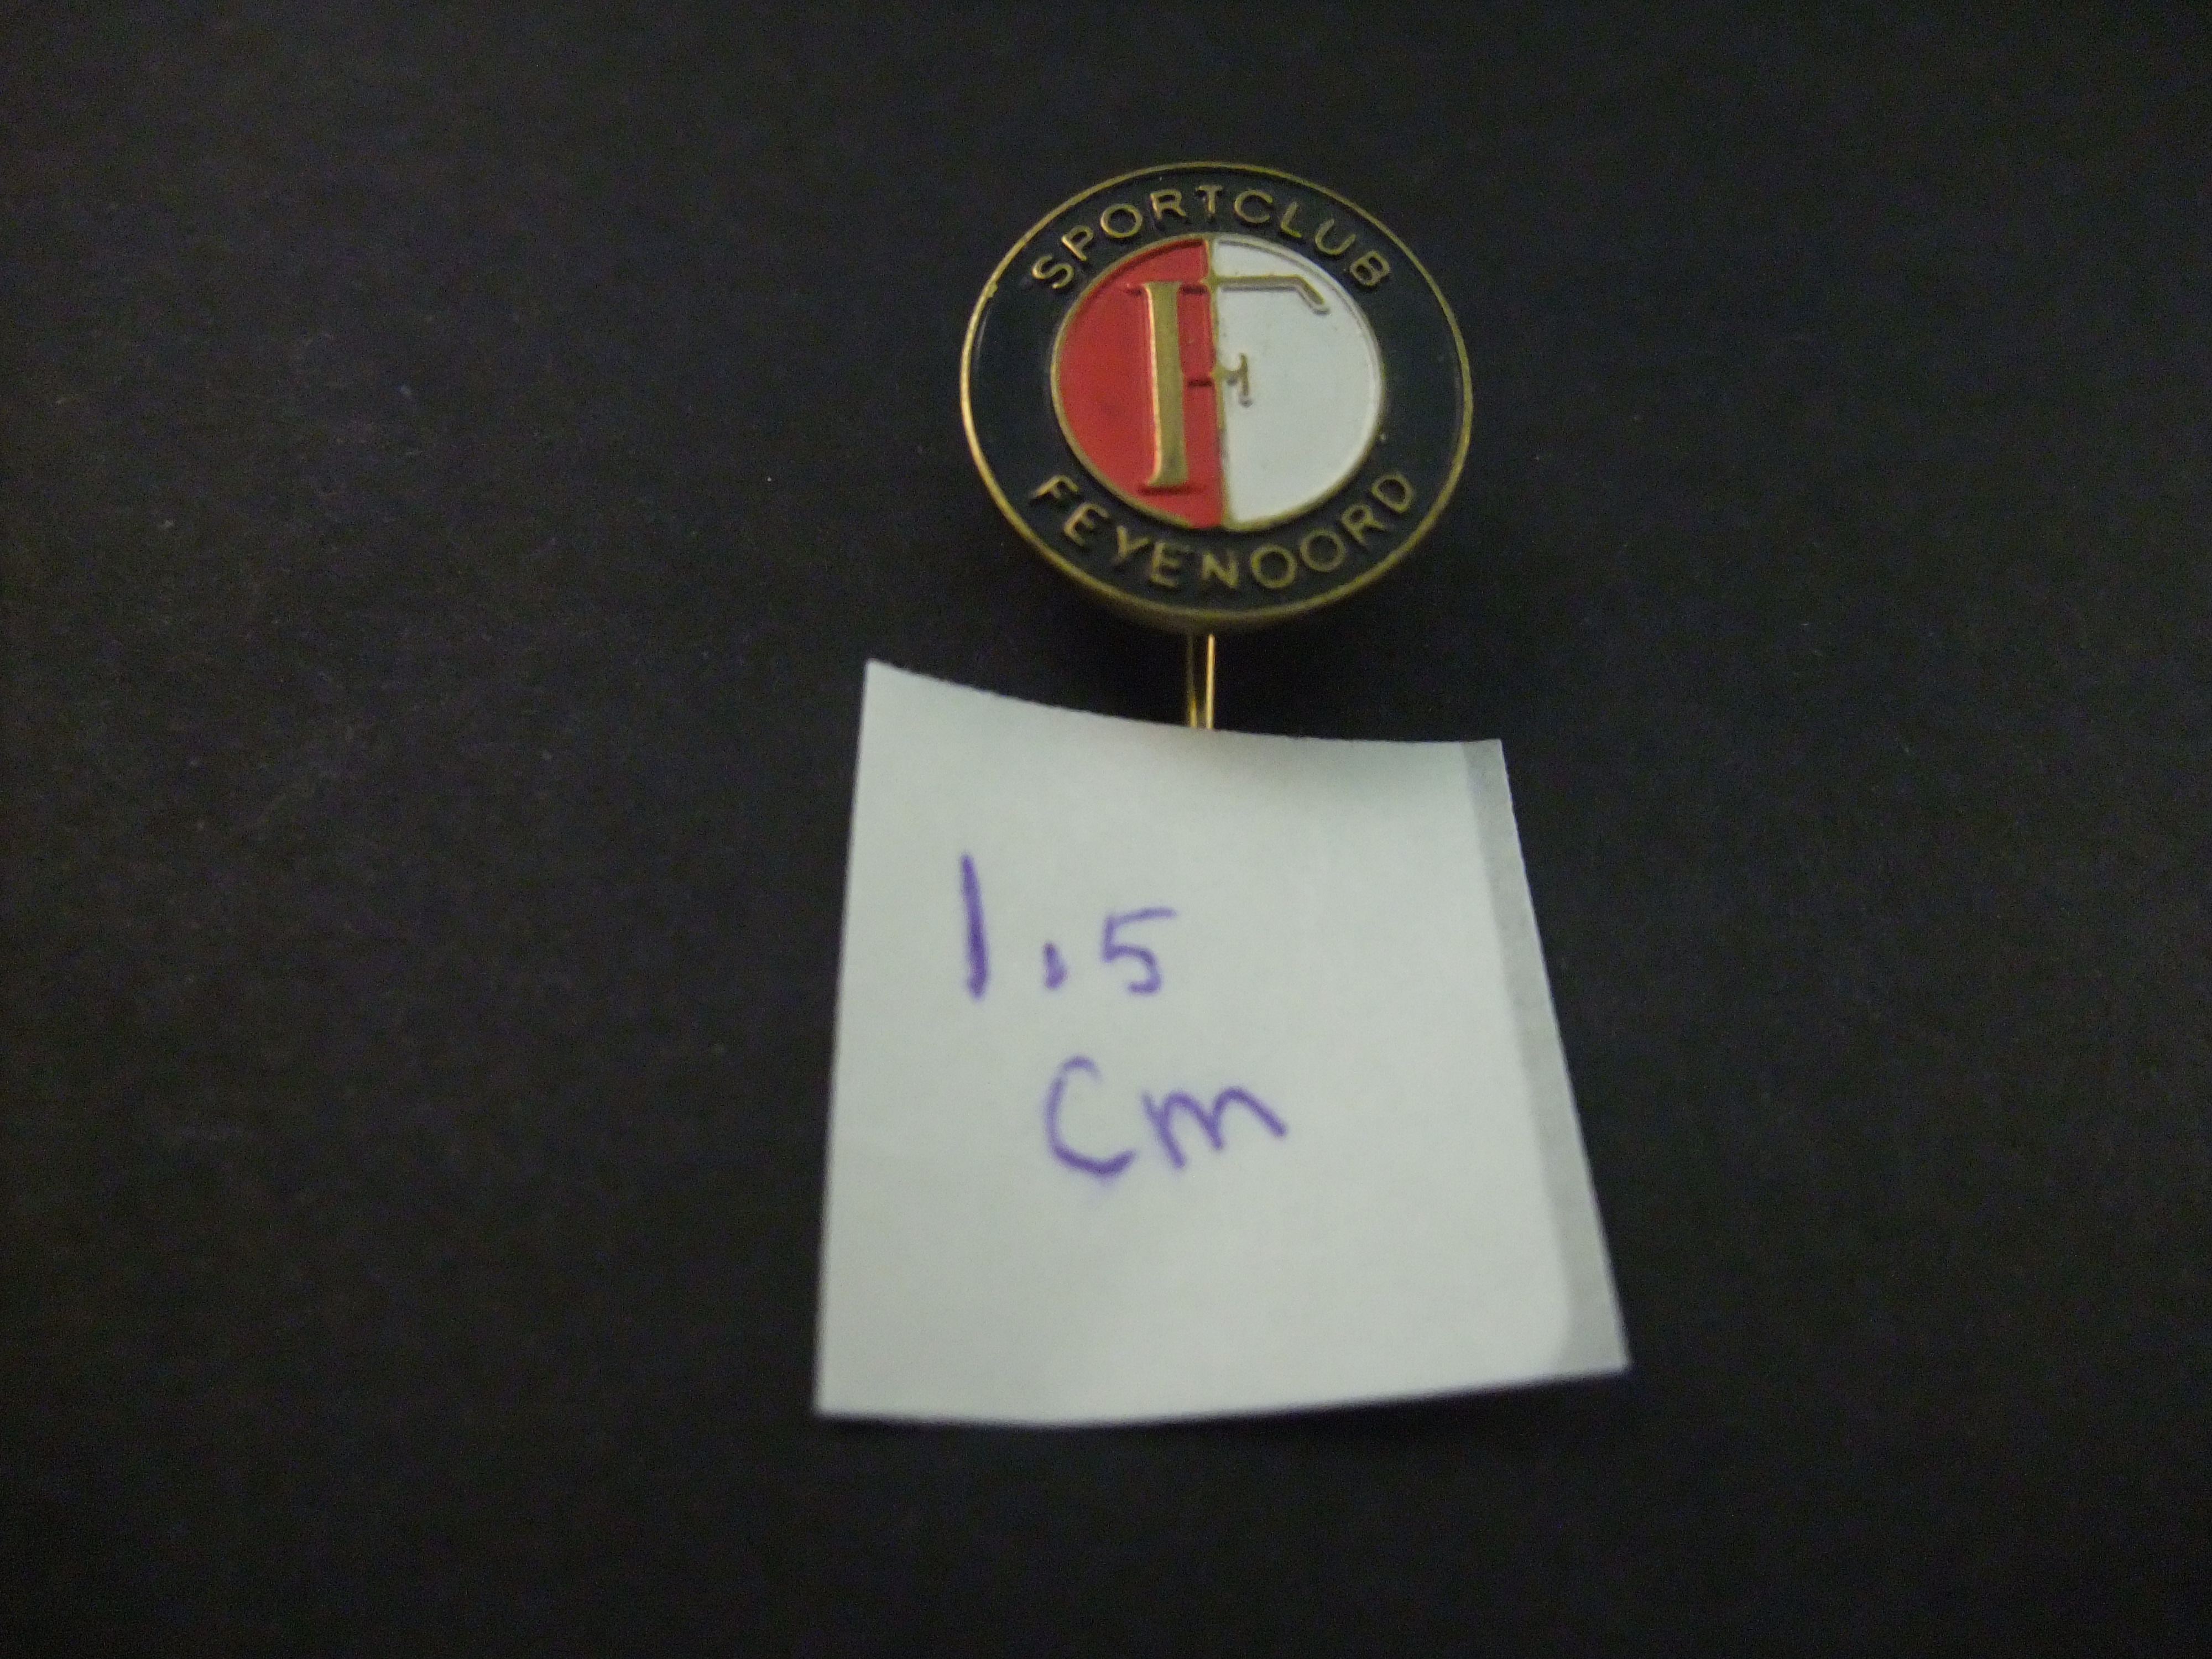 Sportclub Feyenoord Rotterdam logo 1.5 cm